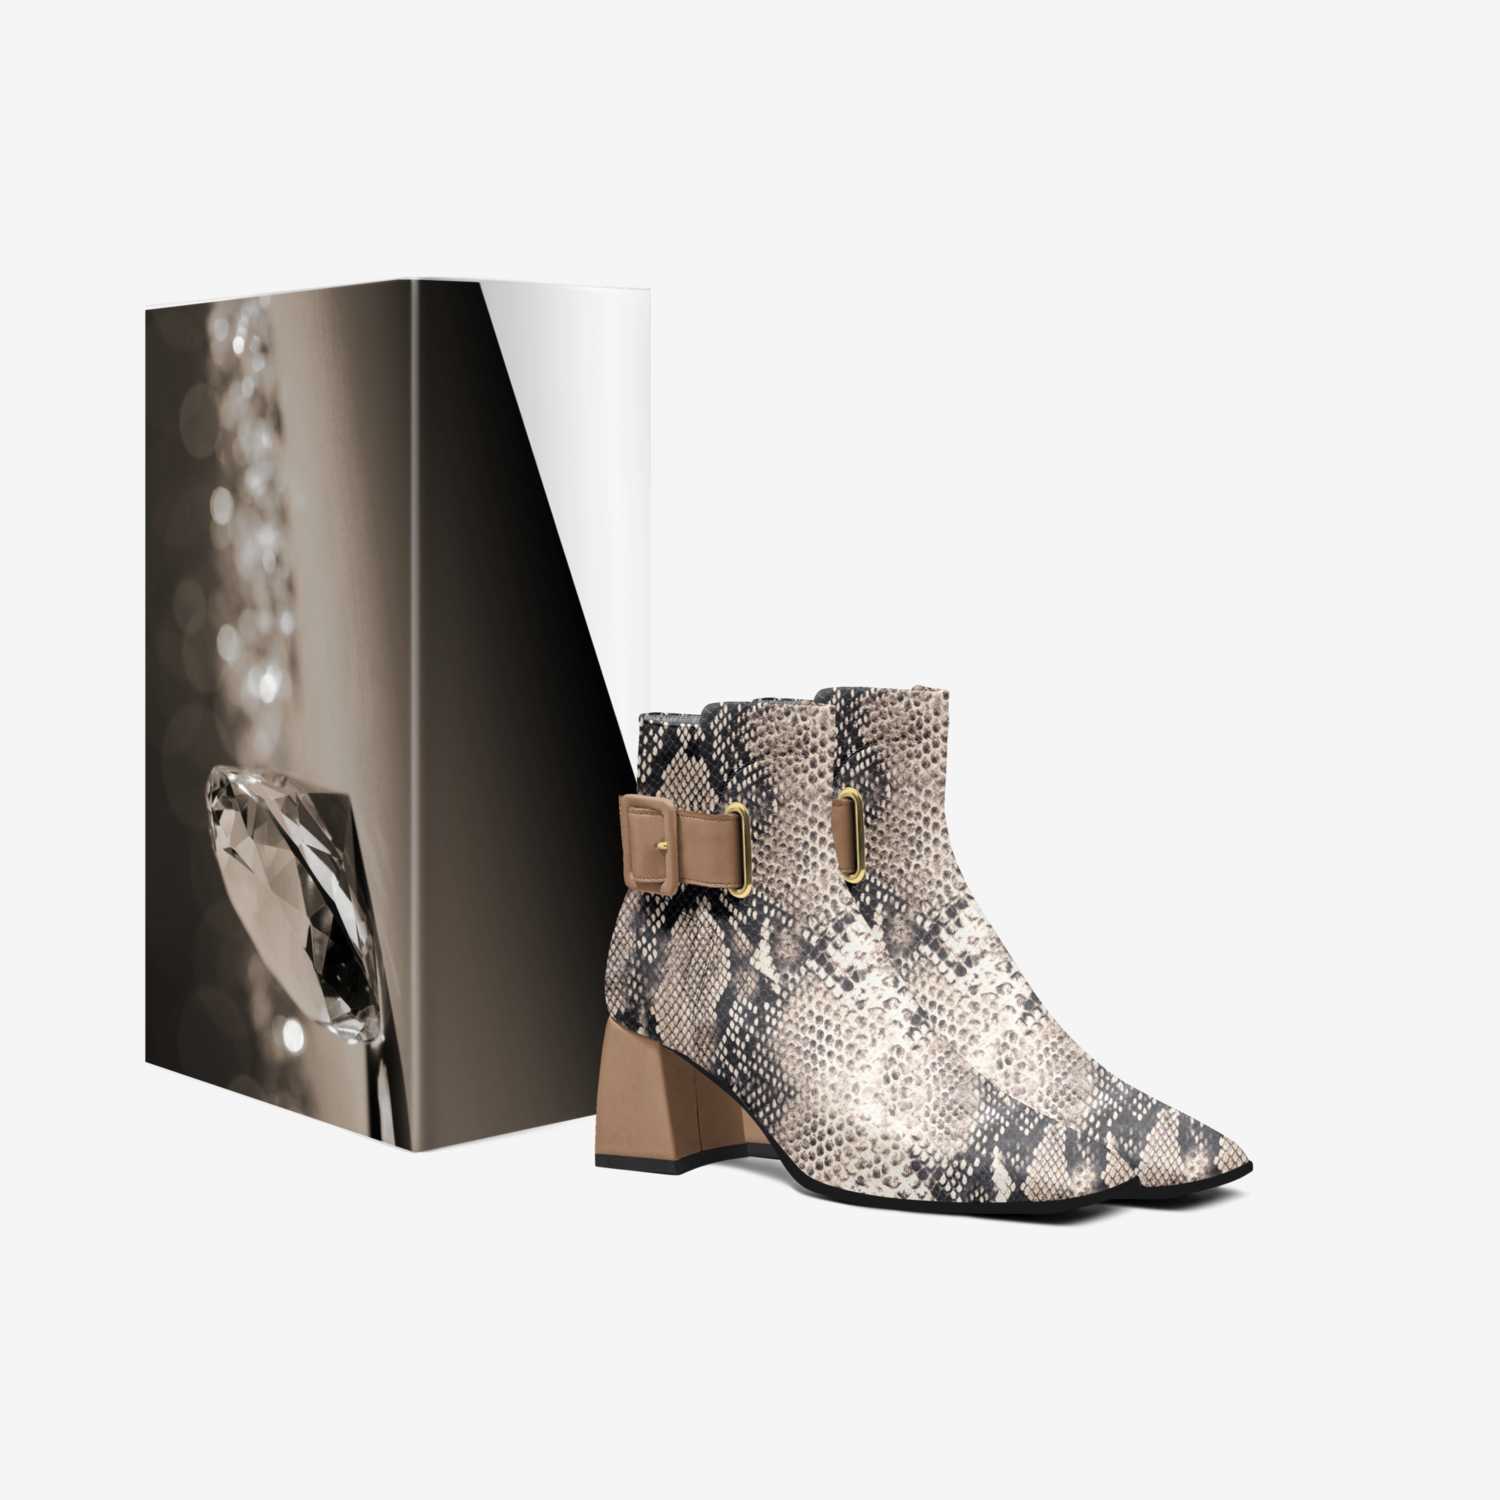 Cameron Sensation  custom made in Italy shoes by Anise Tatiana Wheeler | Box view